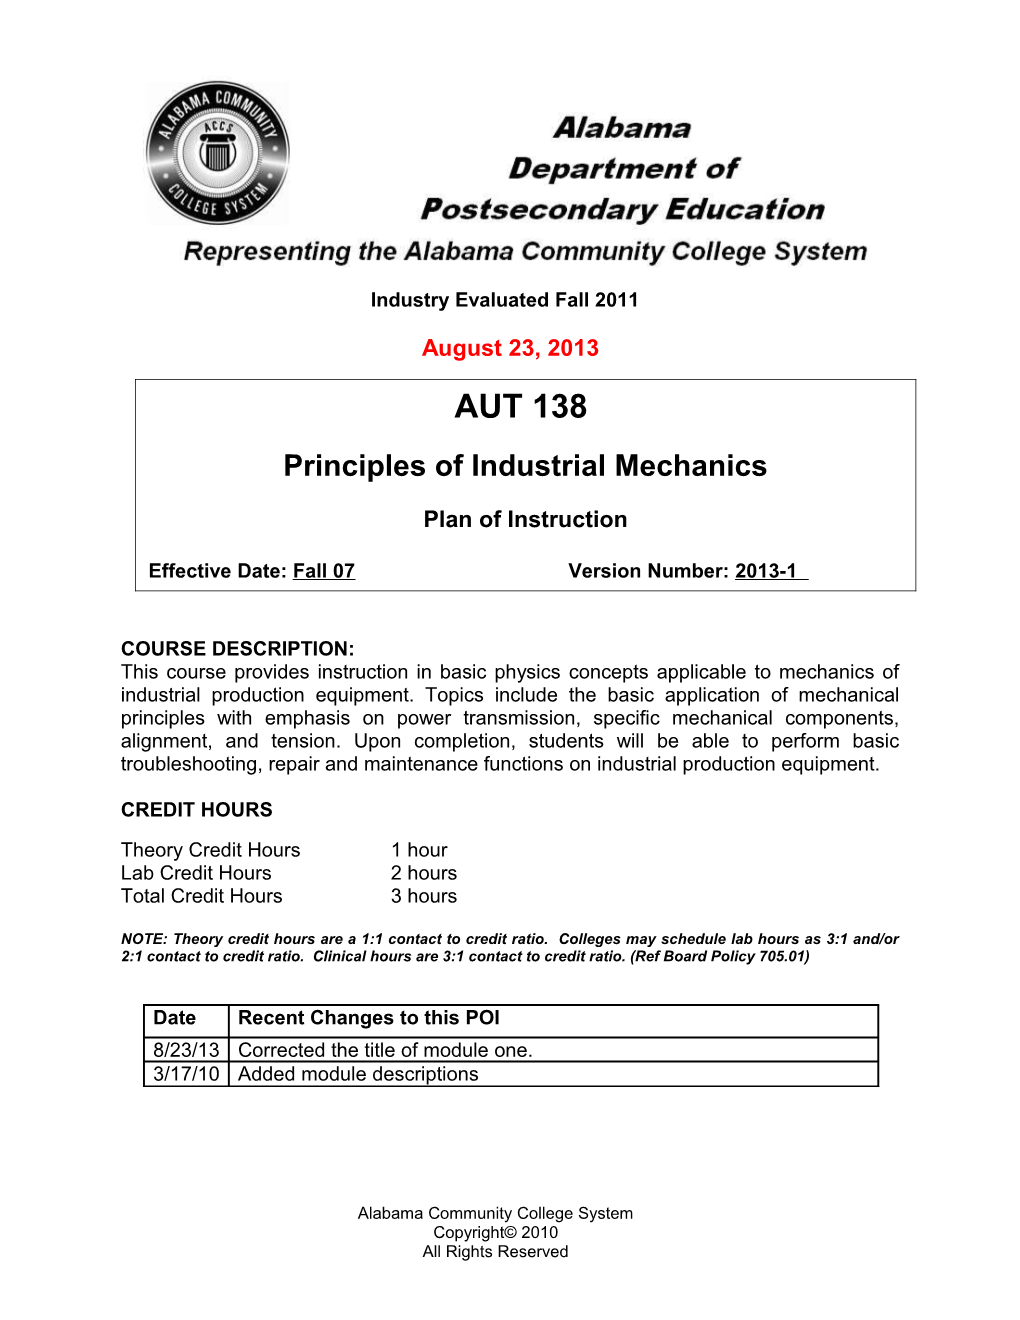 AUT 138 Principles of Industrial Mechanics